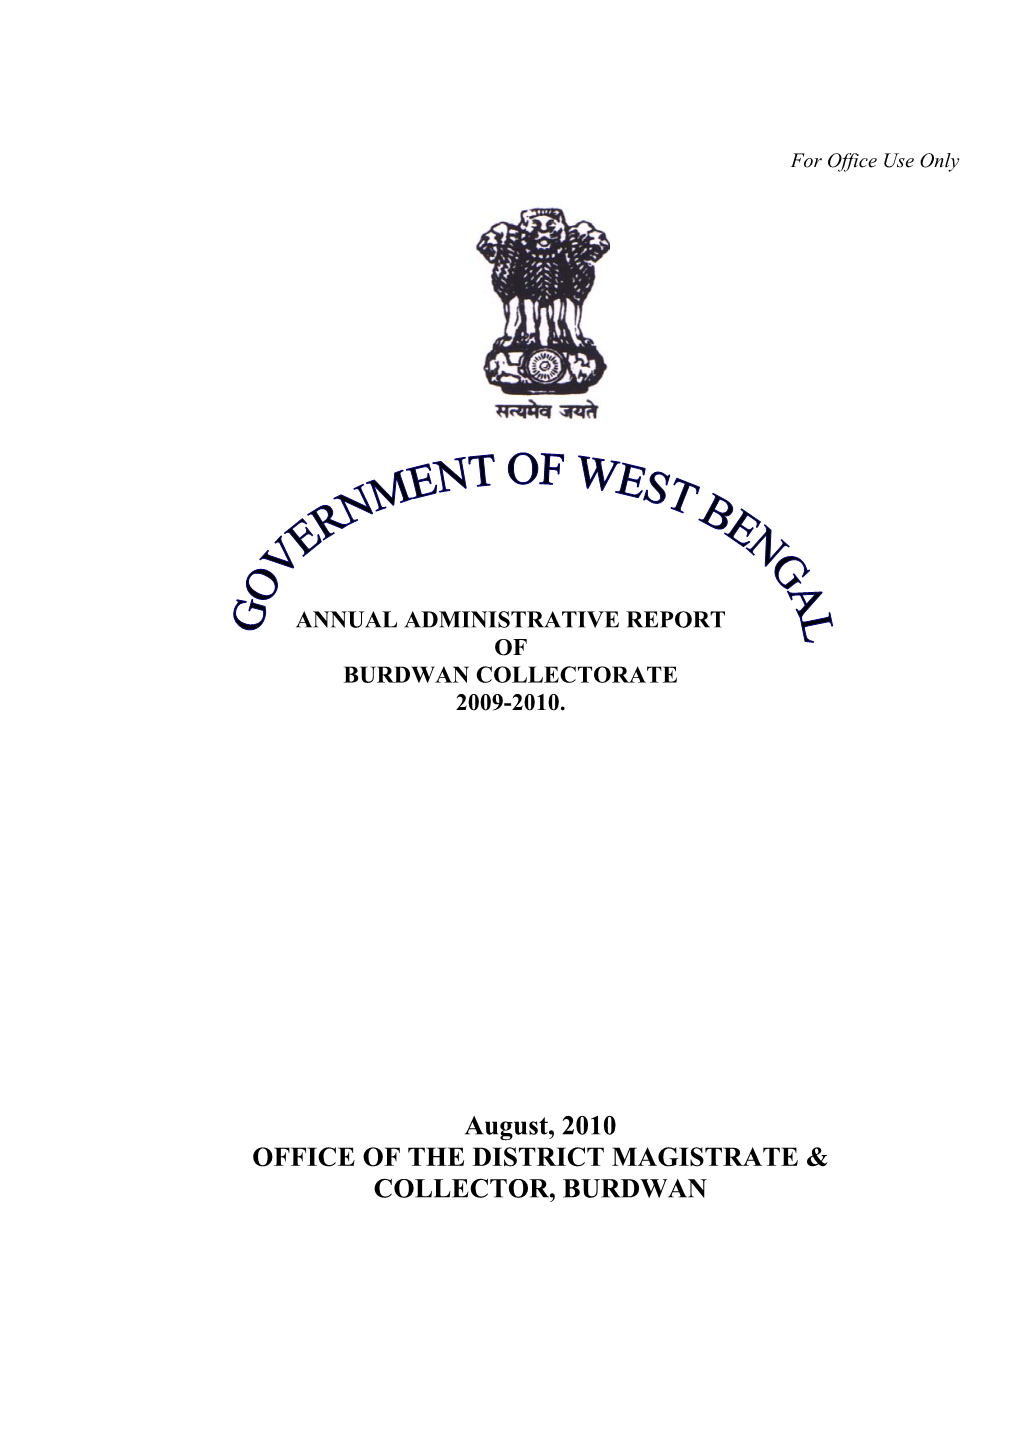 Annual Administrative Report of Burdwan Collectorate 2009-2010